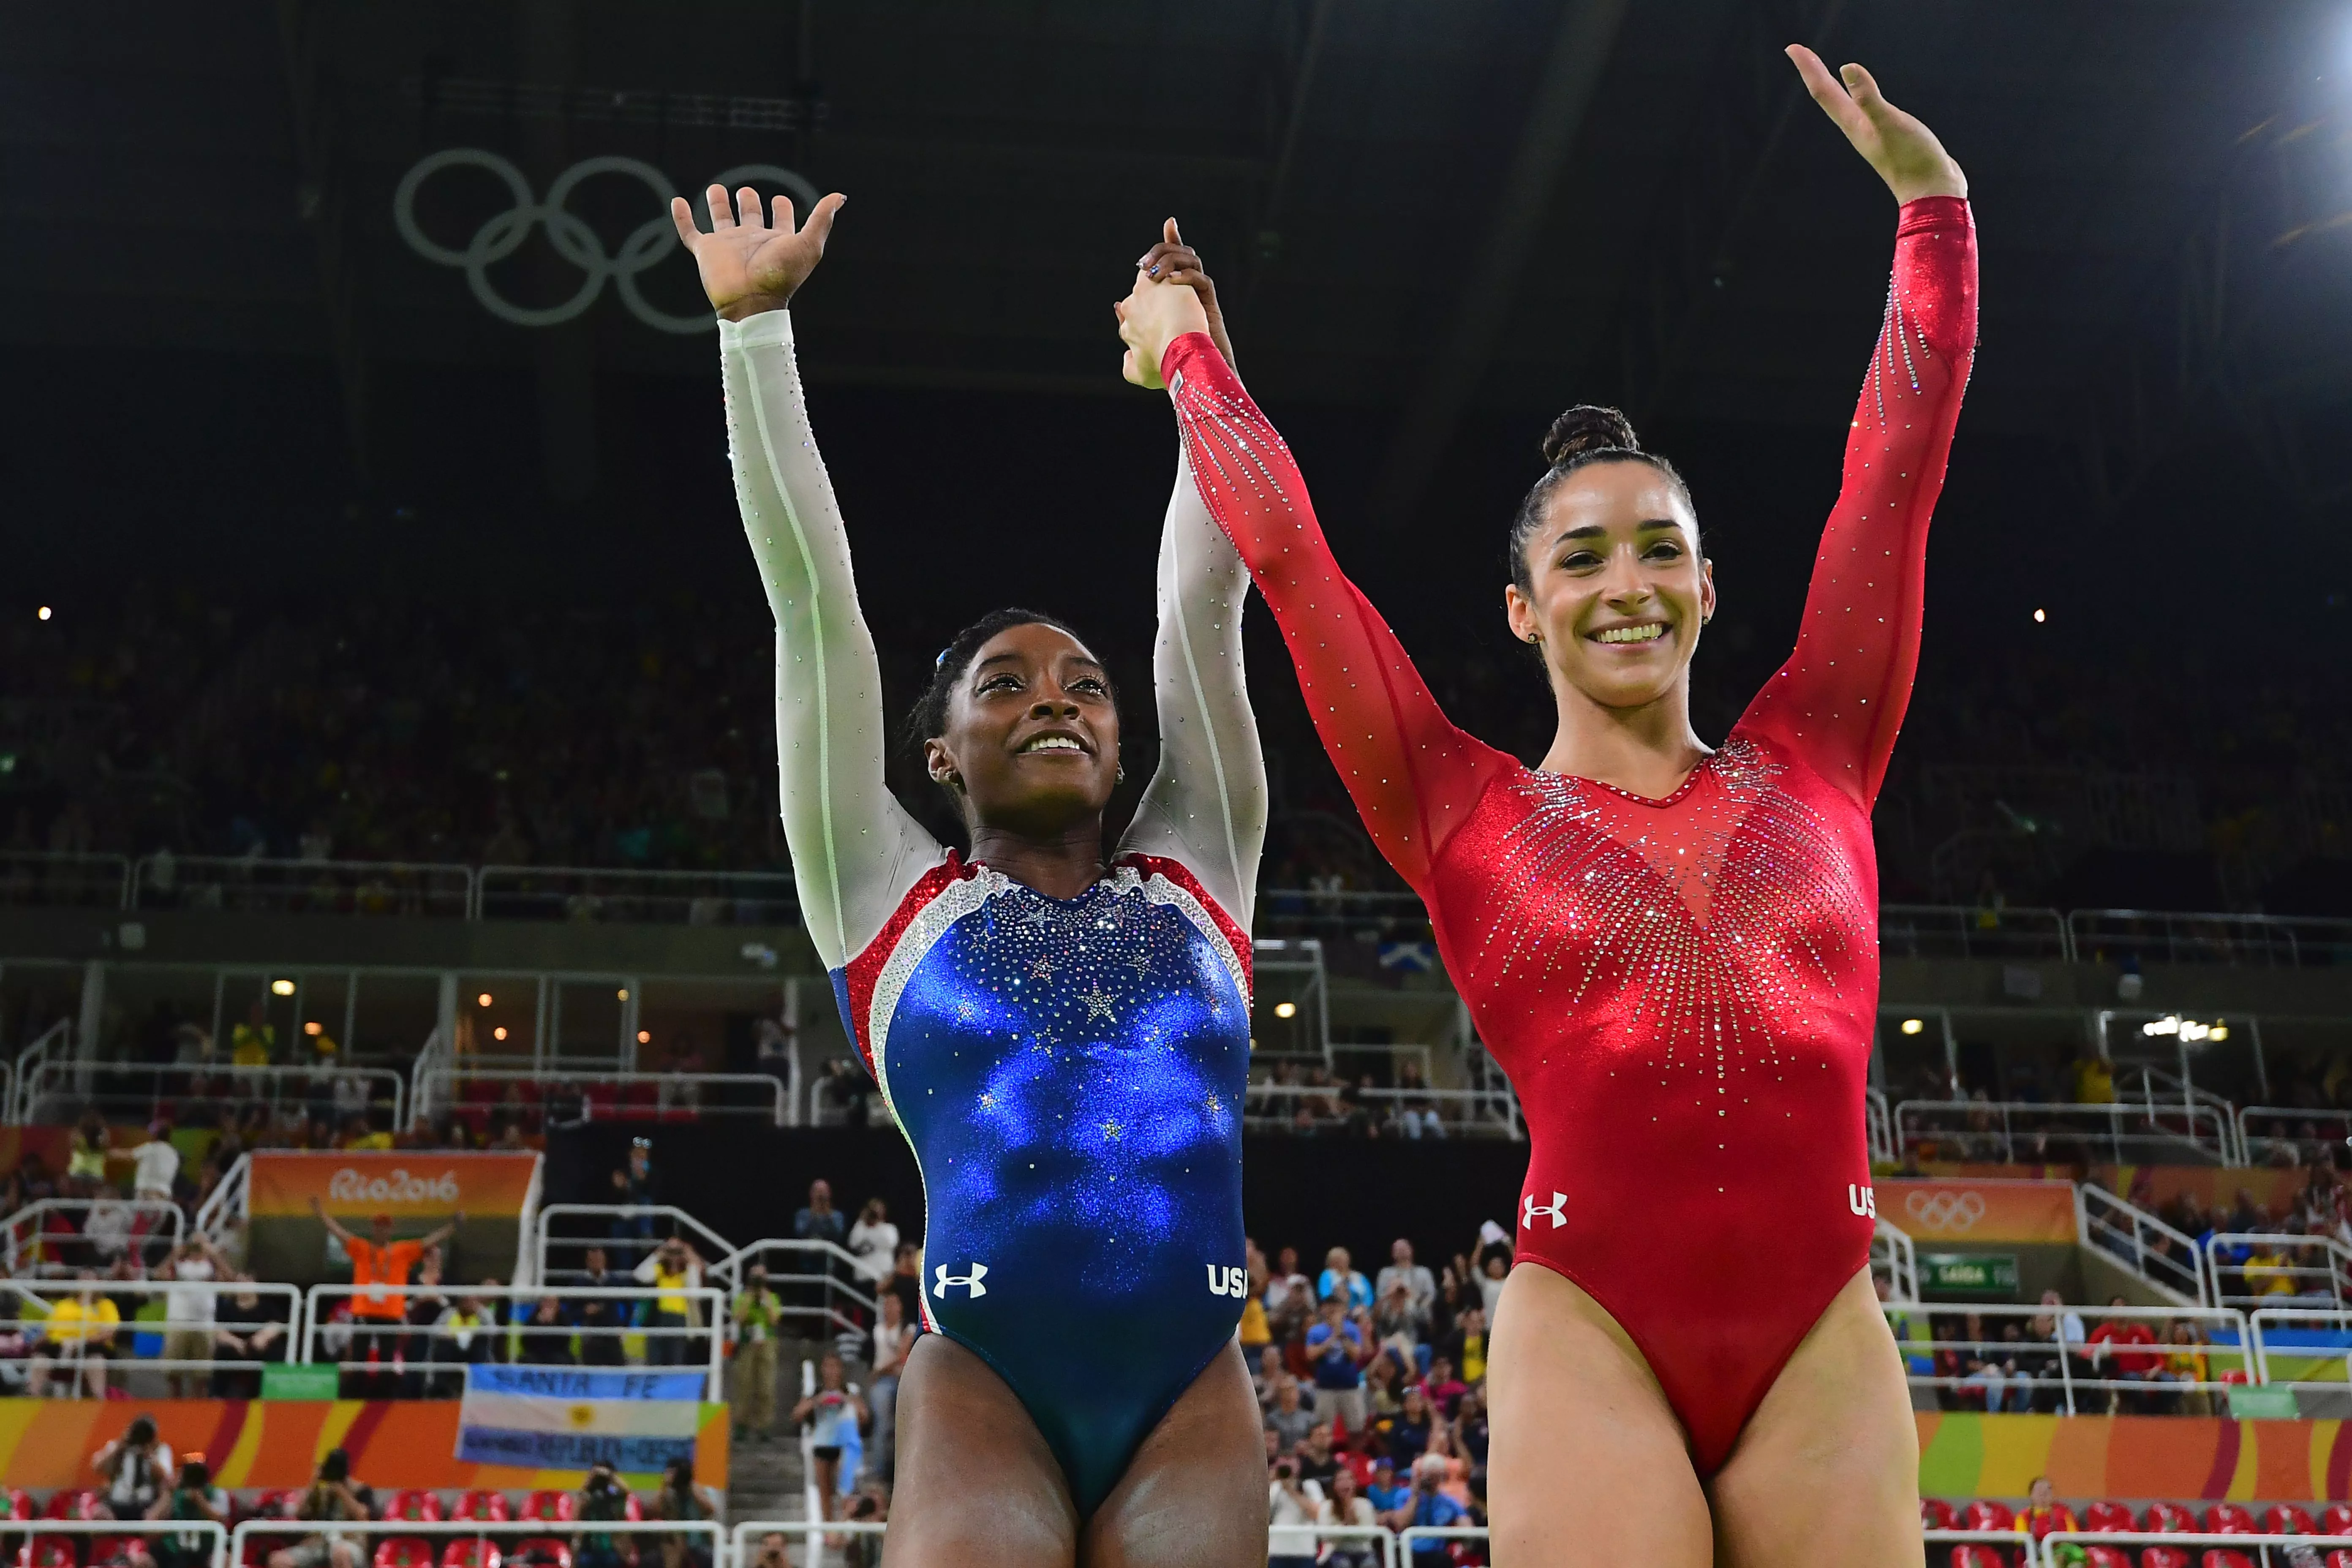 Us Gymnasts Simone Biles And Aly Raisman At The 2016 Olympics Nudes